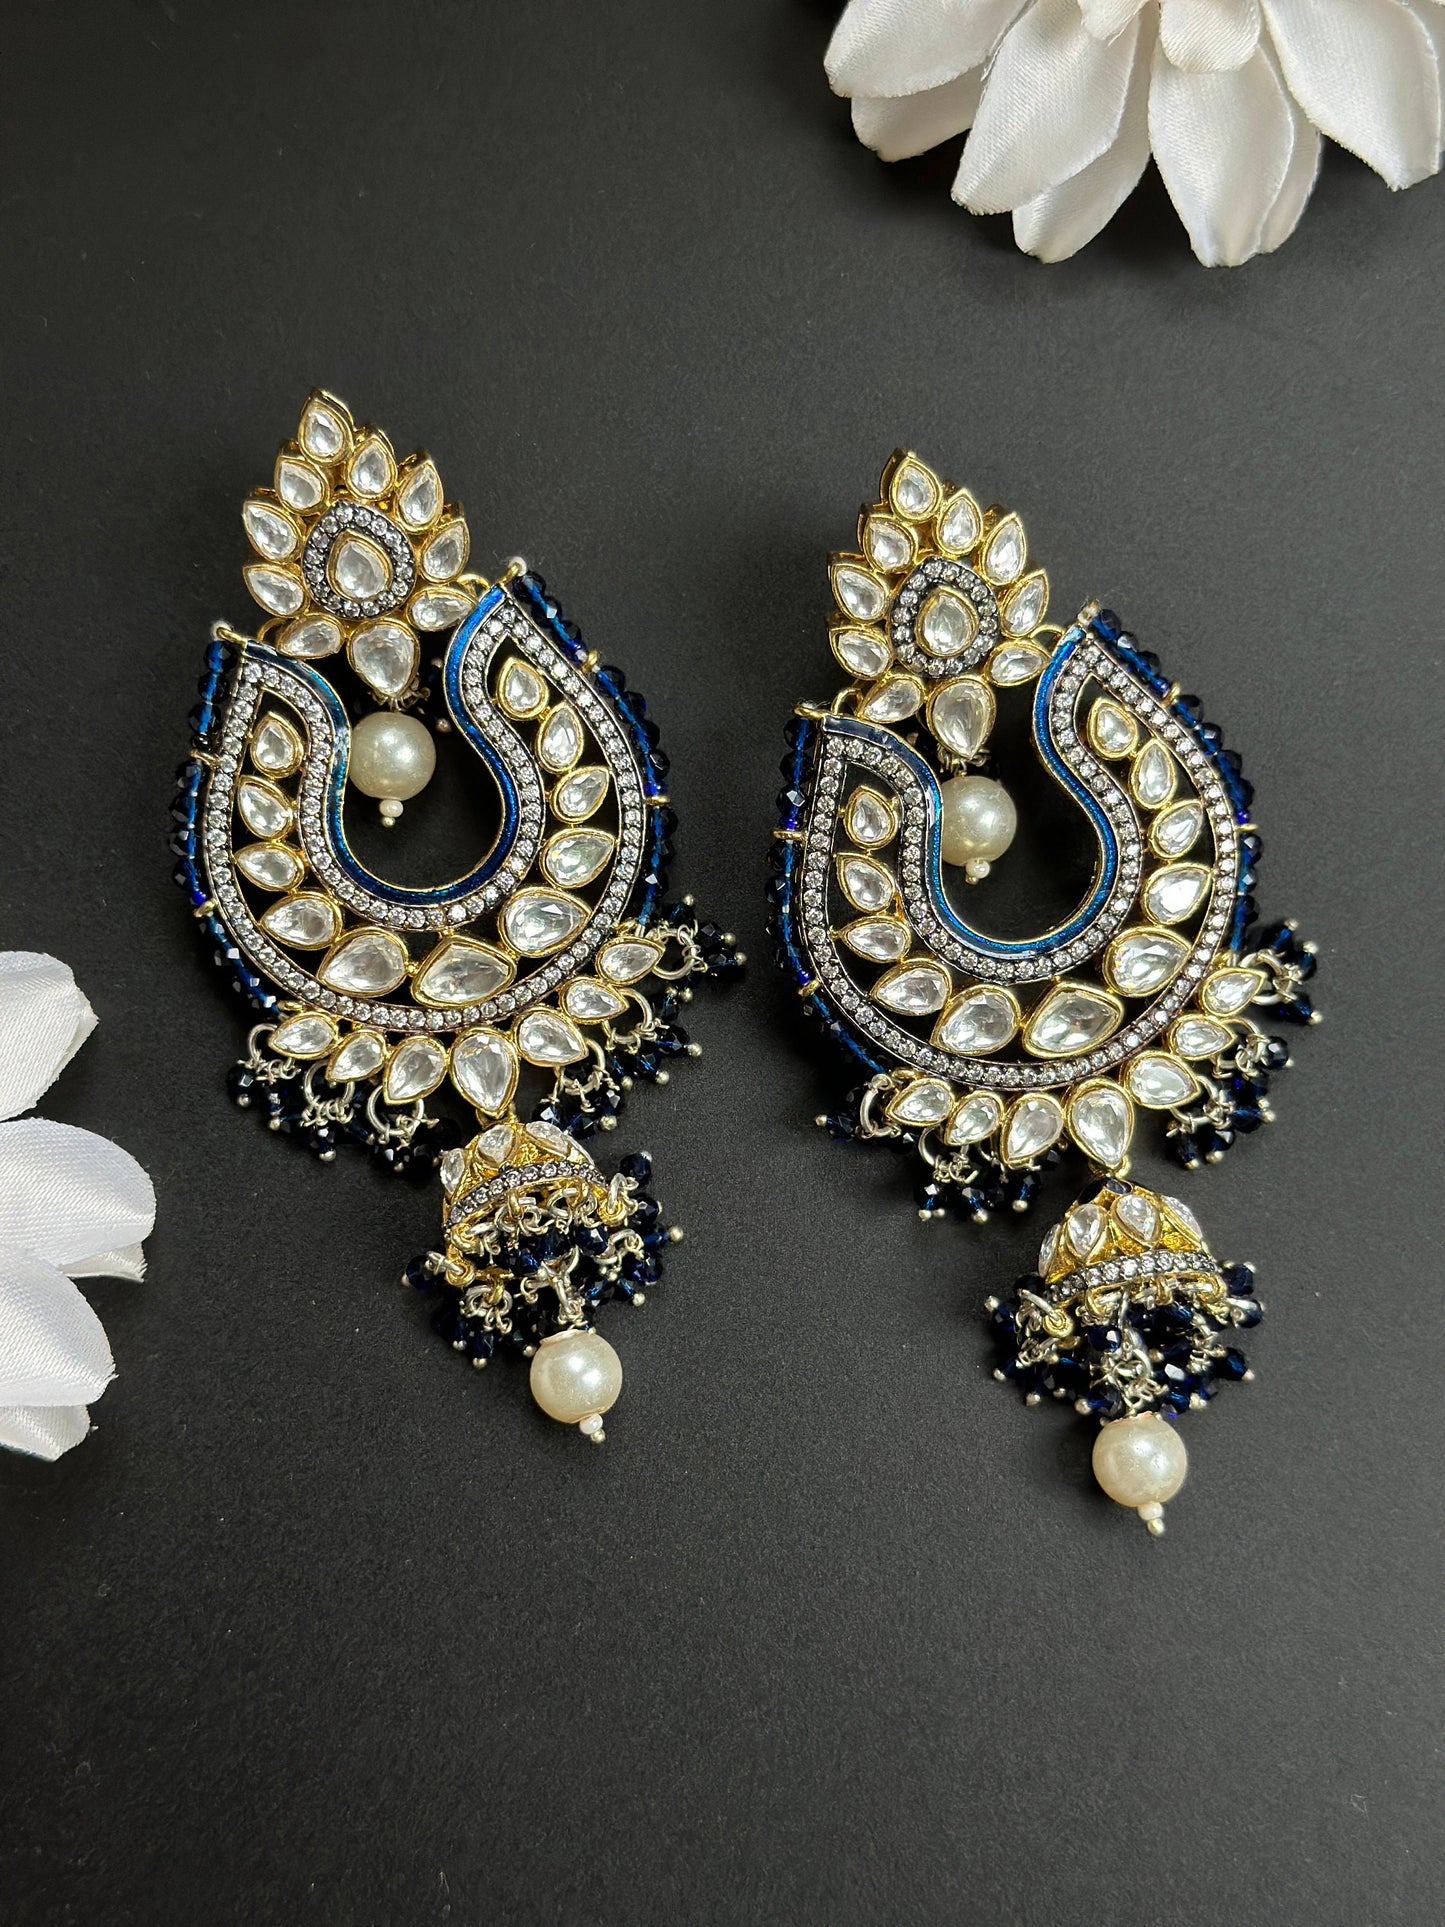 Pink Kundan Jhumka/Mint Blue Chandbali/Indian Long Earrings/Festive Gifts for her/Polki gold Earrings/Statement Earrings/Pakistani Earrings